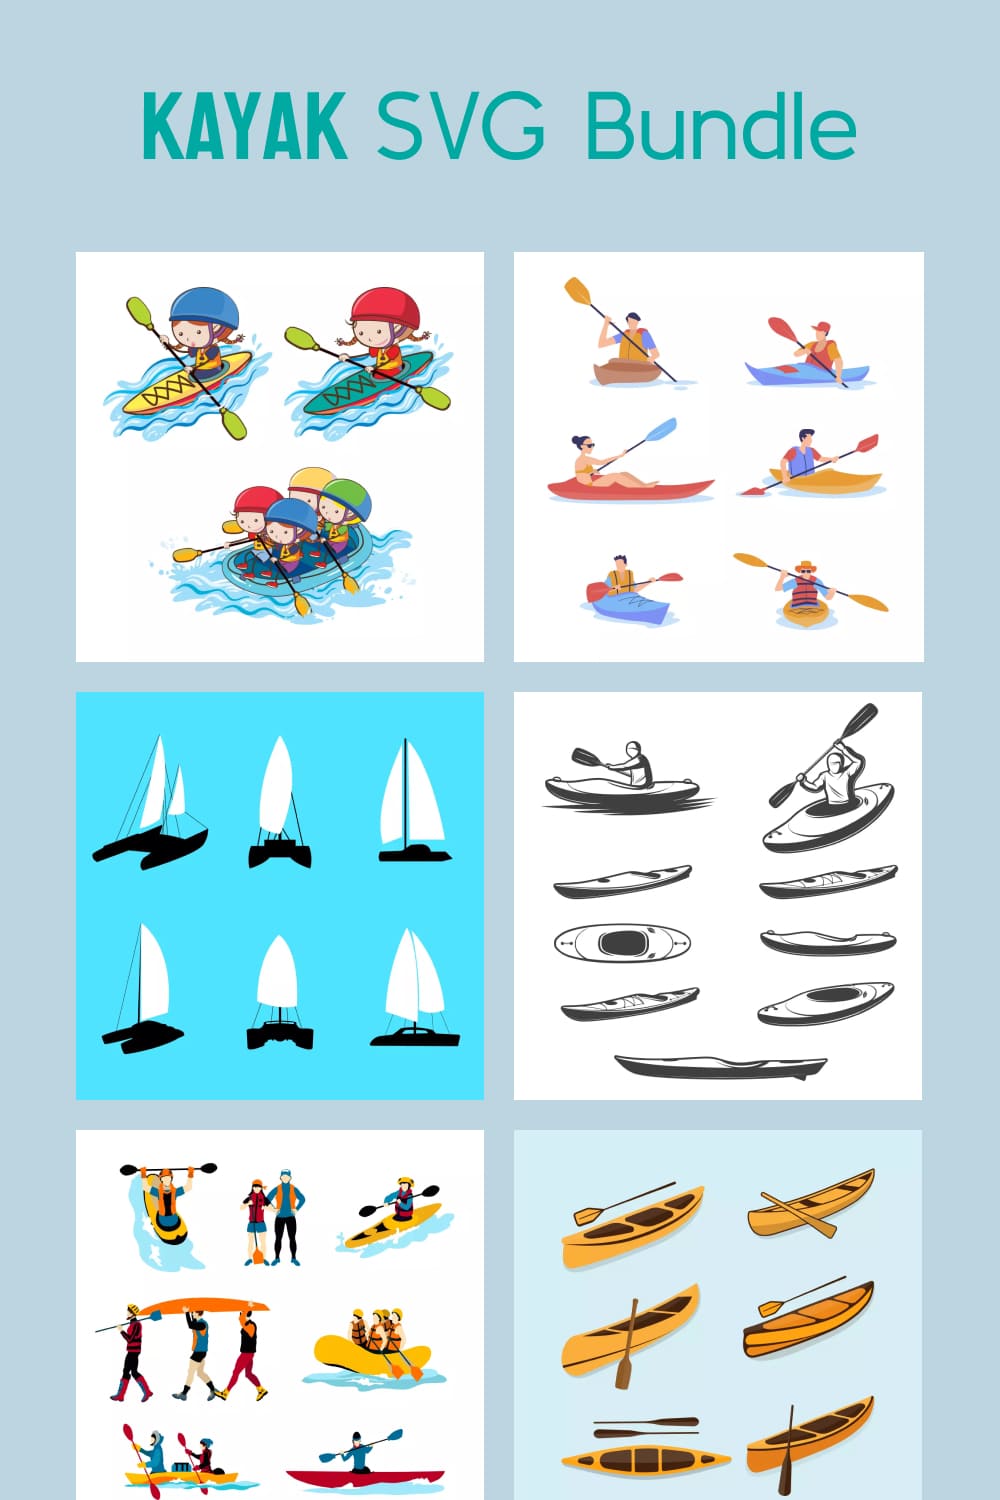 Kayak SVG Bundle Pinterest.